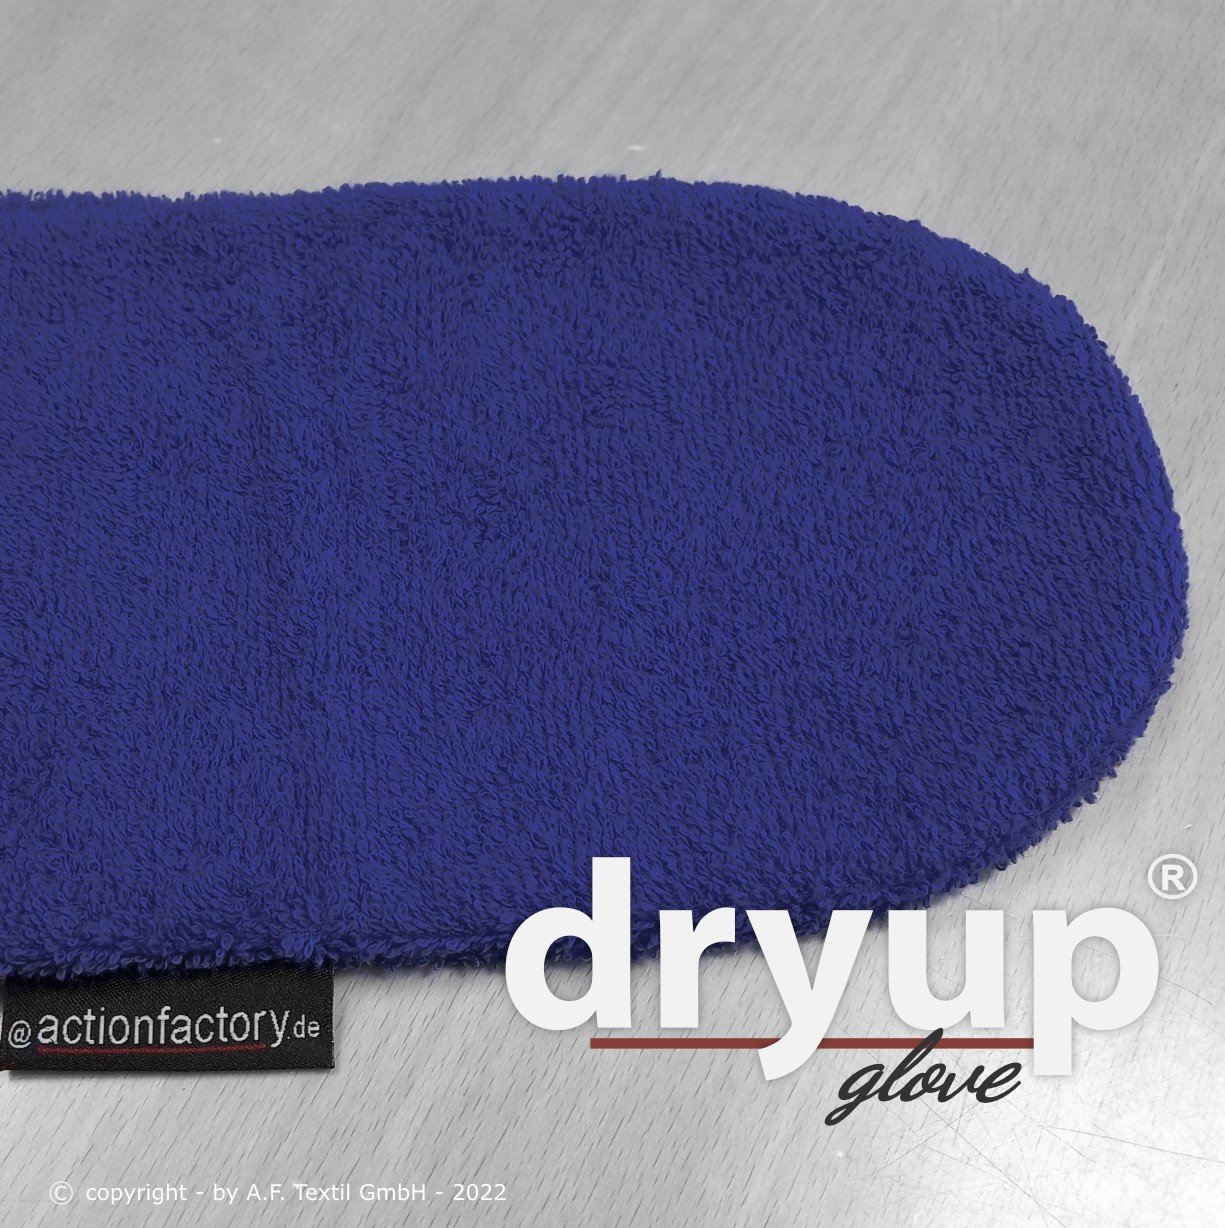 Dryup Glove - Blueberry